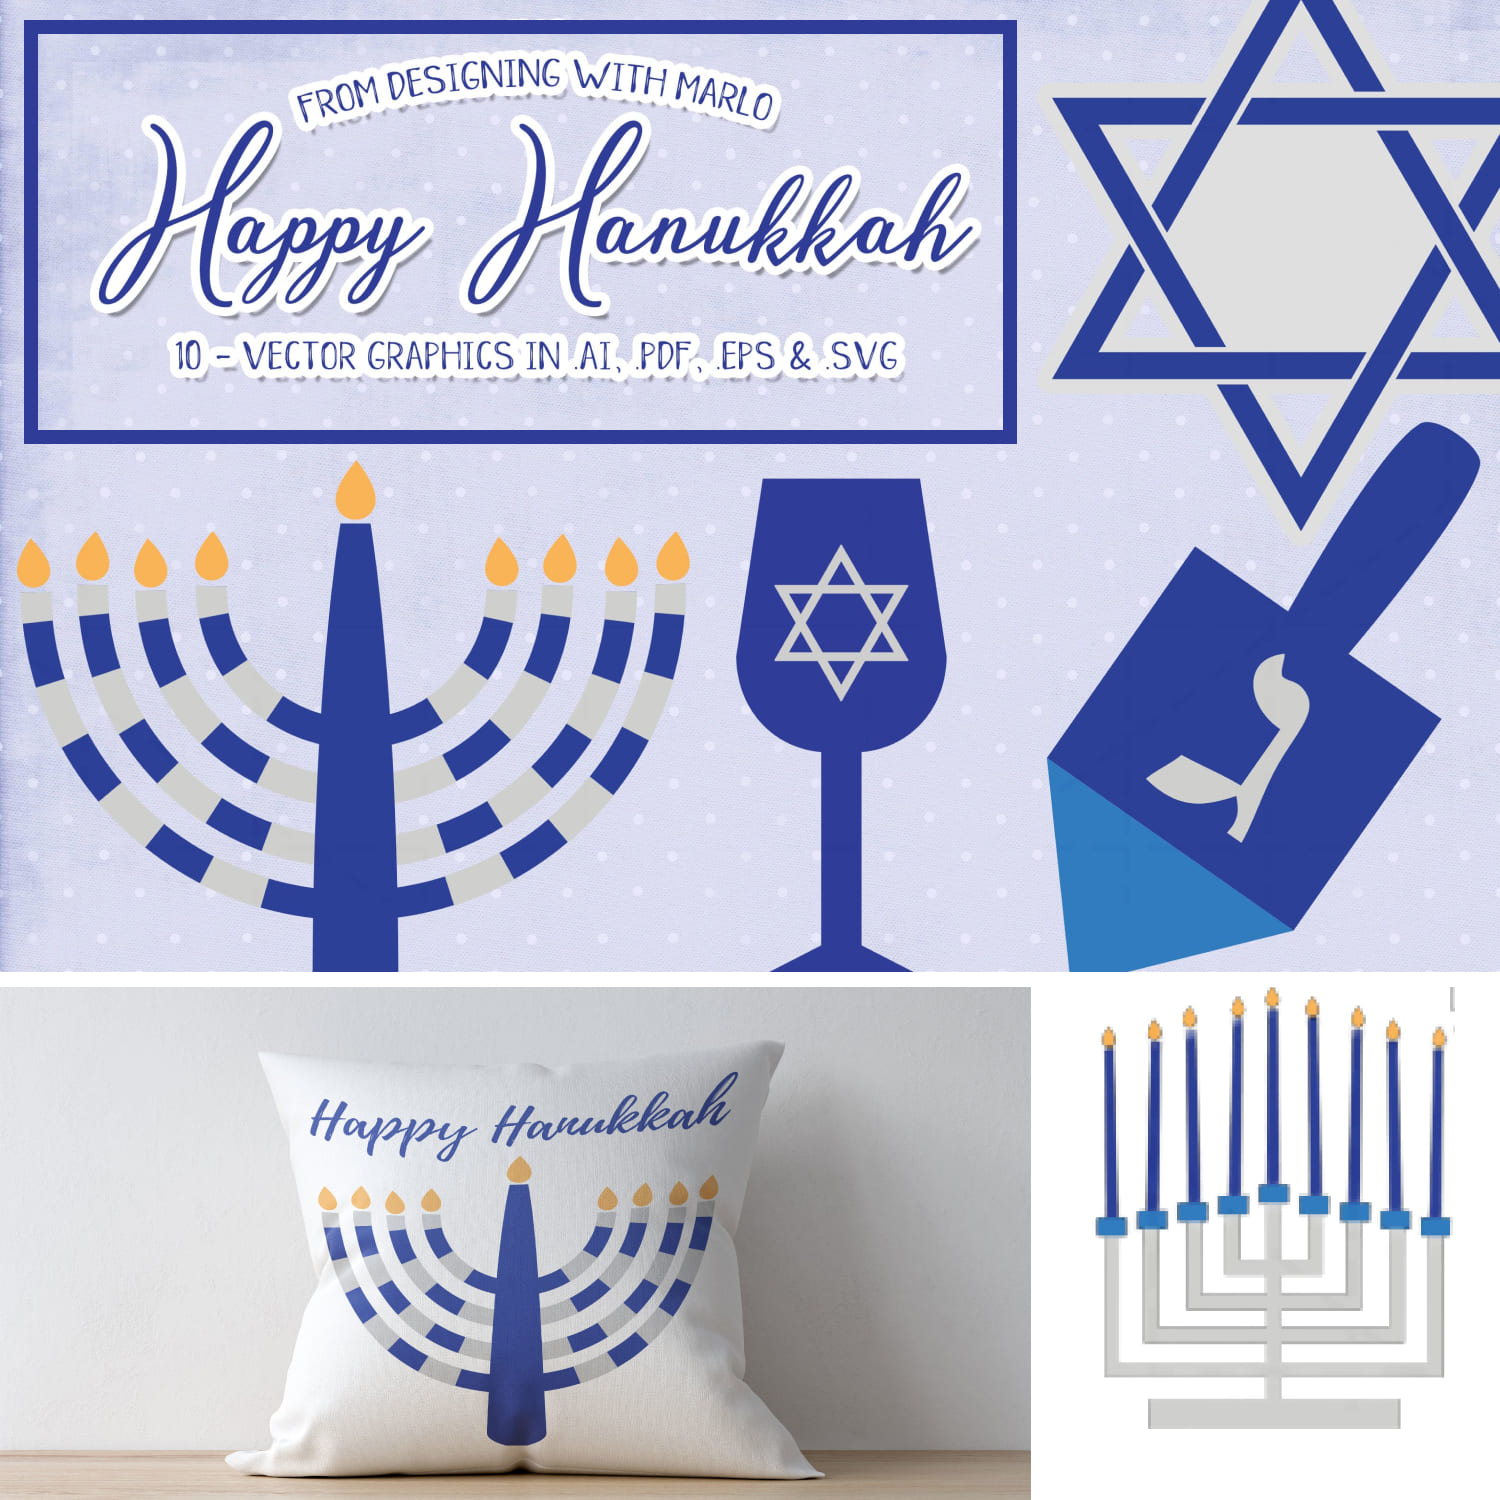 Prints of happy hanukkah.